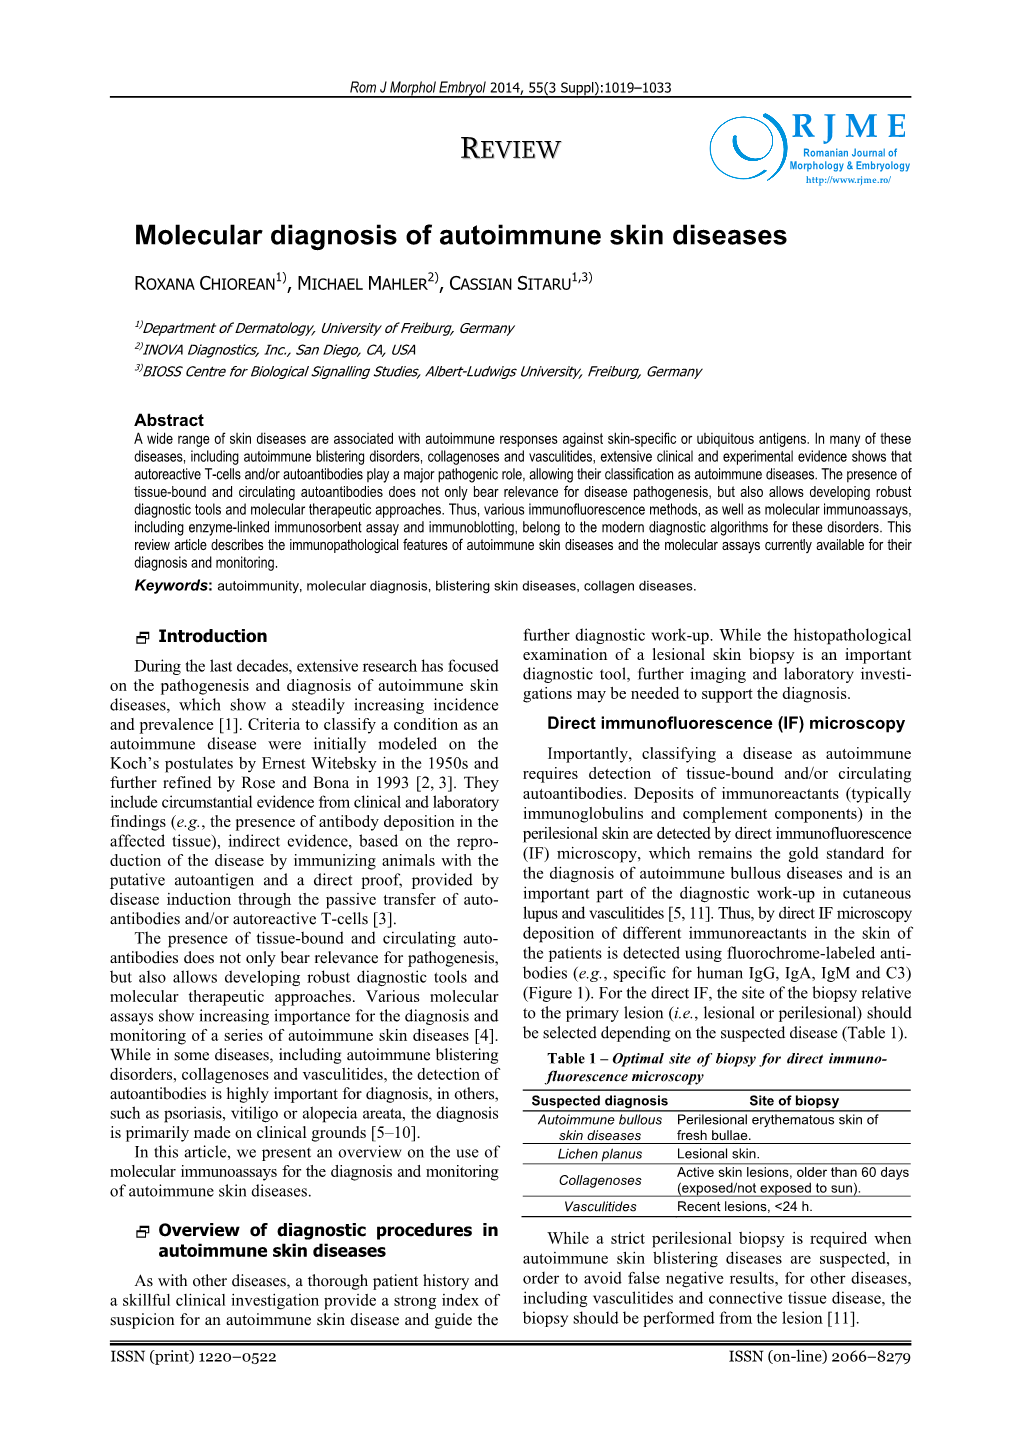 Molecular Diagnosis of Autoimmune Skin Diseases